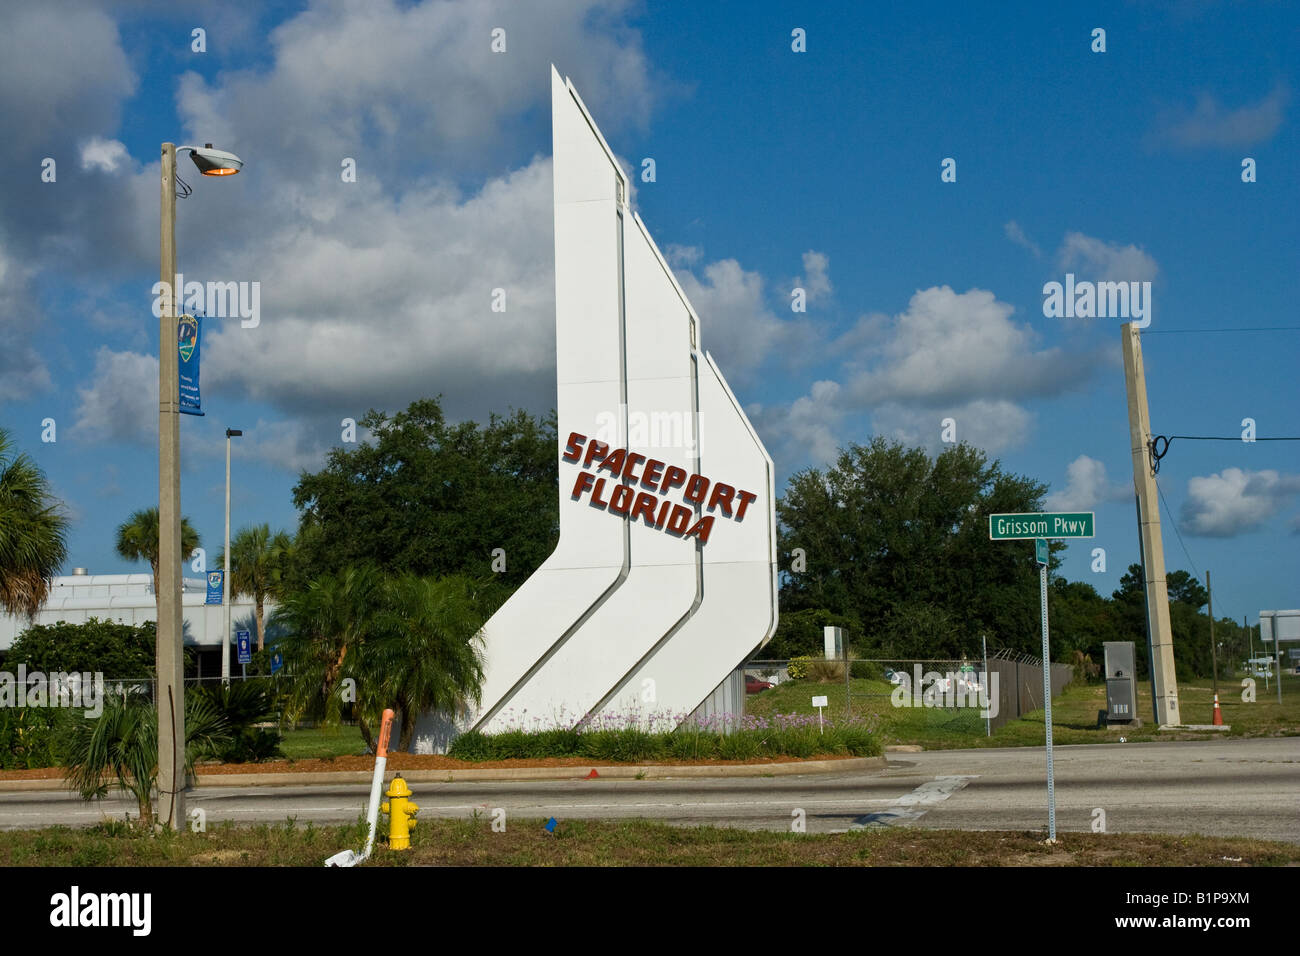 Segno di ingresso a Spaceport Florida in Titusville Florida USA Foto Stock